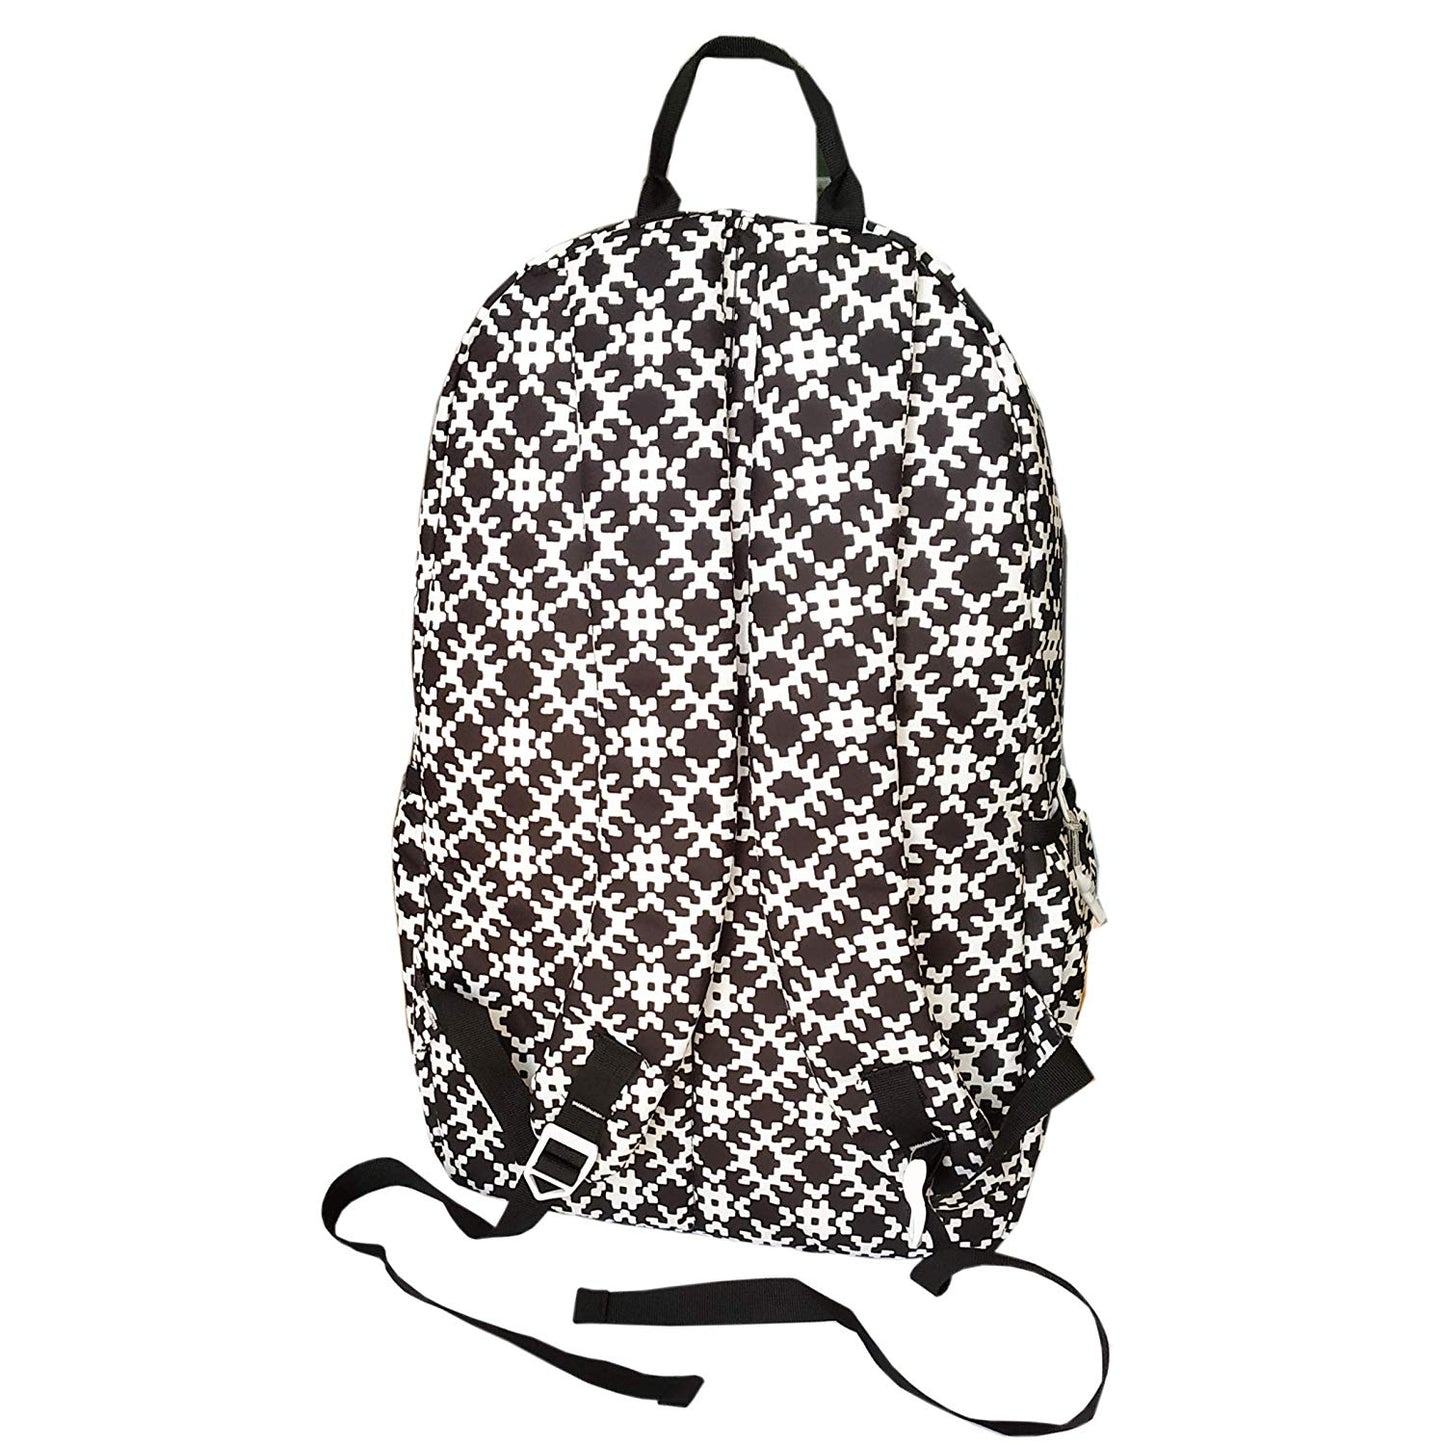 Prokick 30 Ltrs Lite Weight Waterproof Casual Backpack | School Bag, Black - Best Price online Prokicksports.com